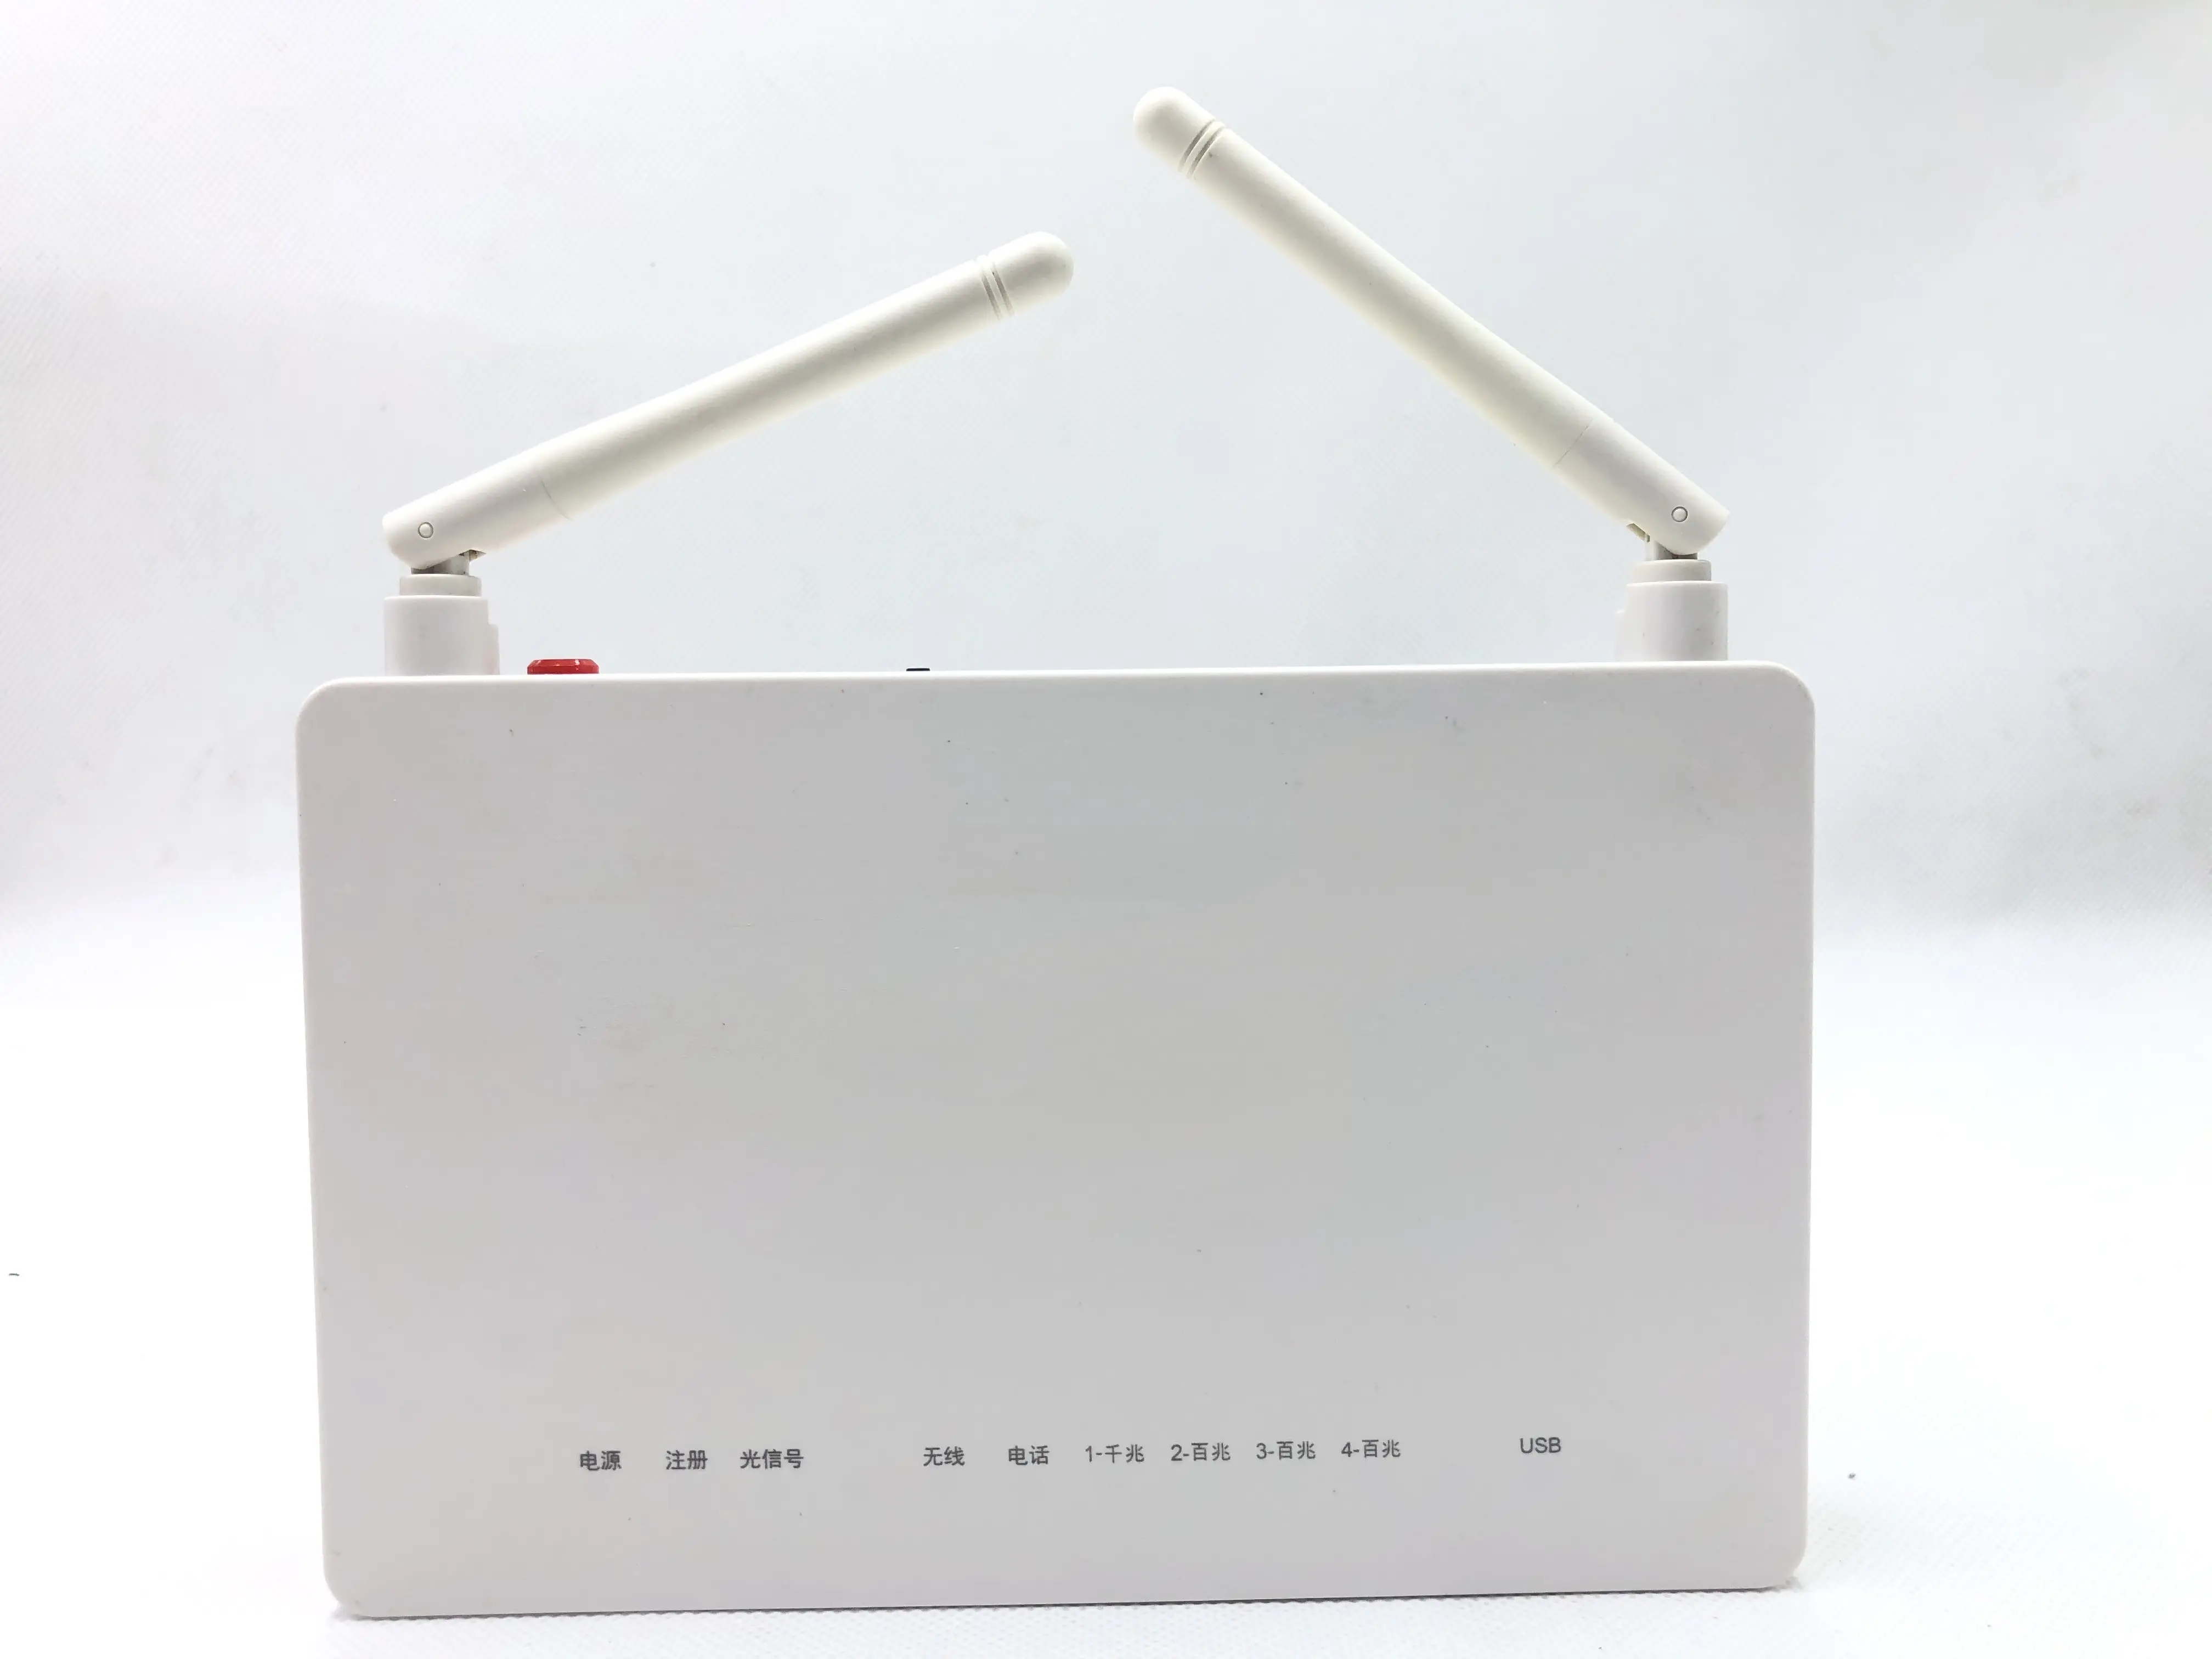 جهاز ONUF677 GPON ONT مستخدم 3FE+1Pots+1USB+WiFi ONU به إنجليزي